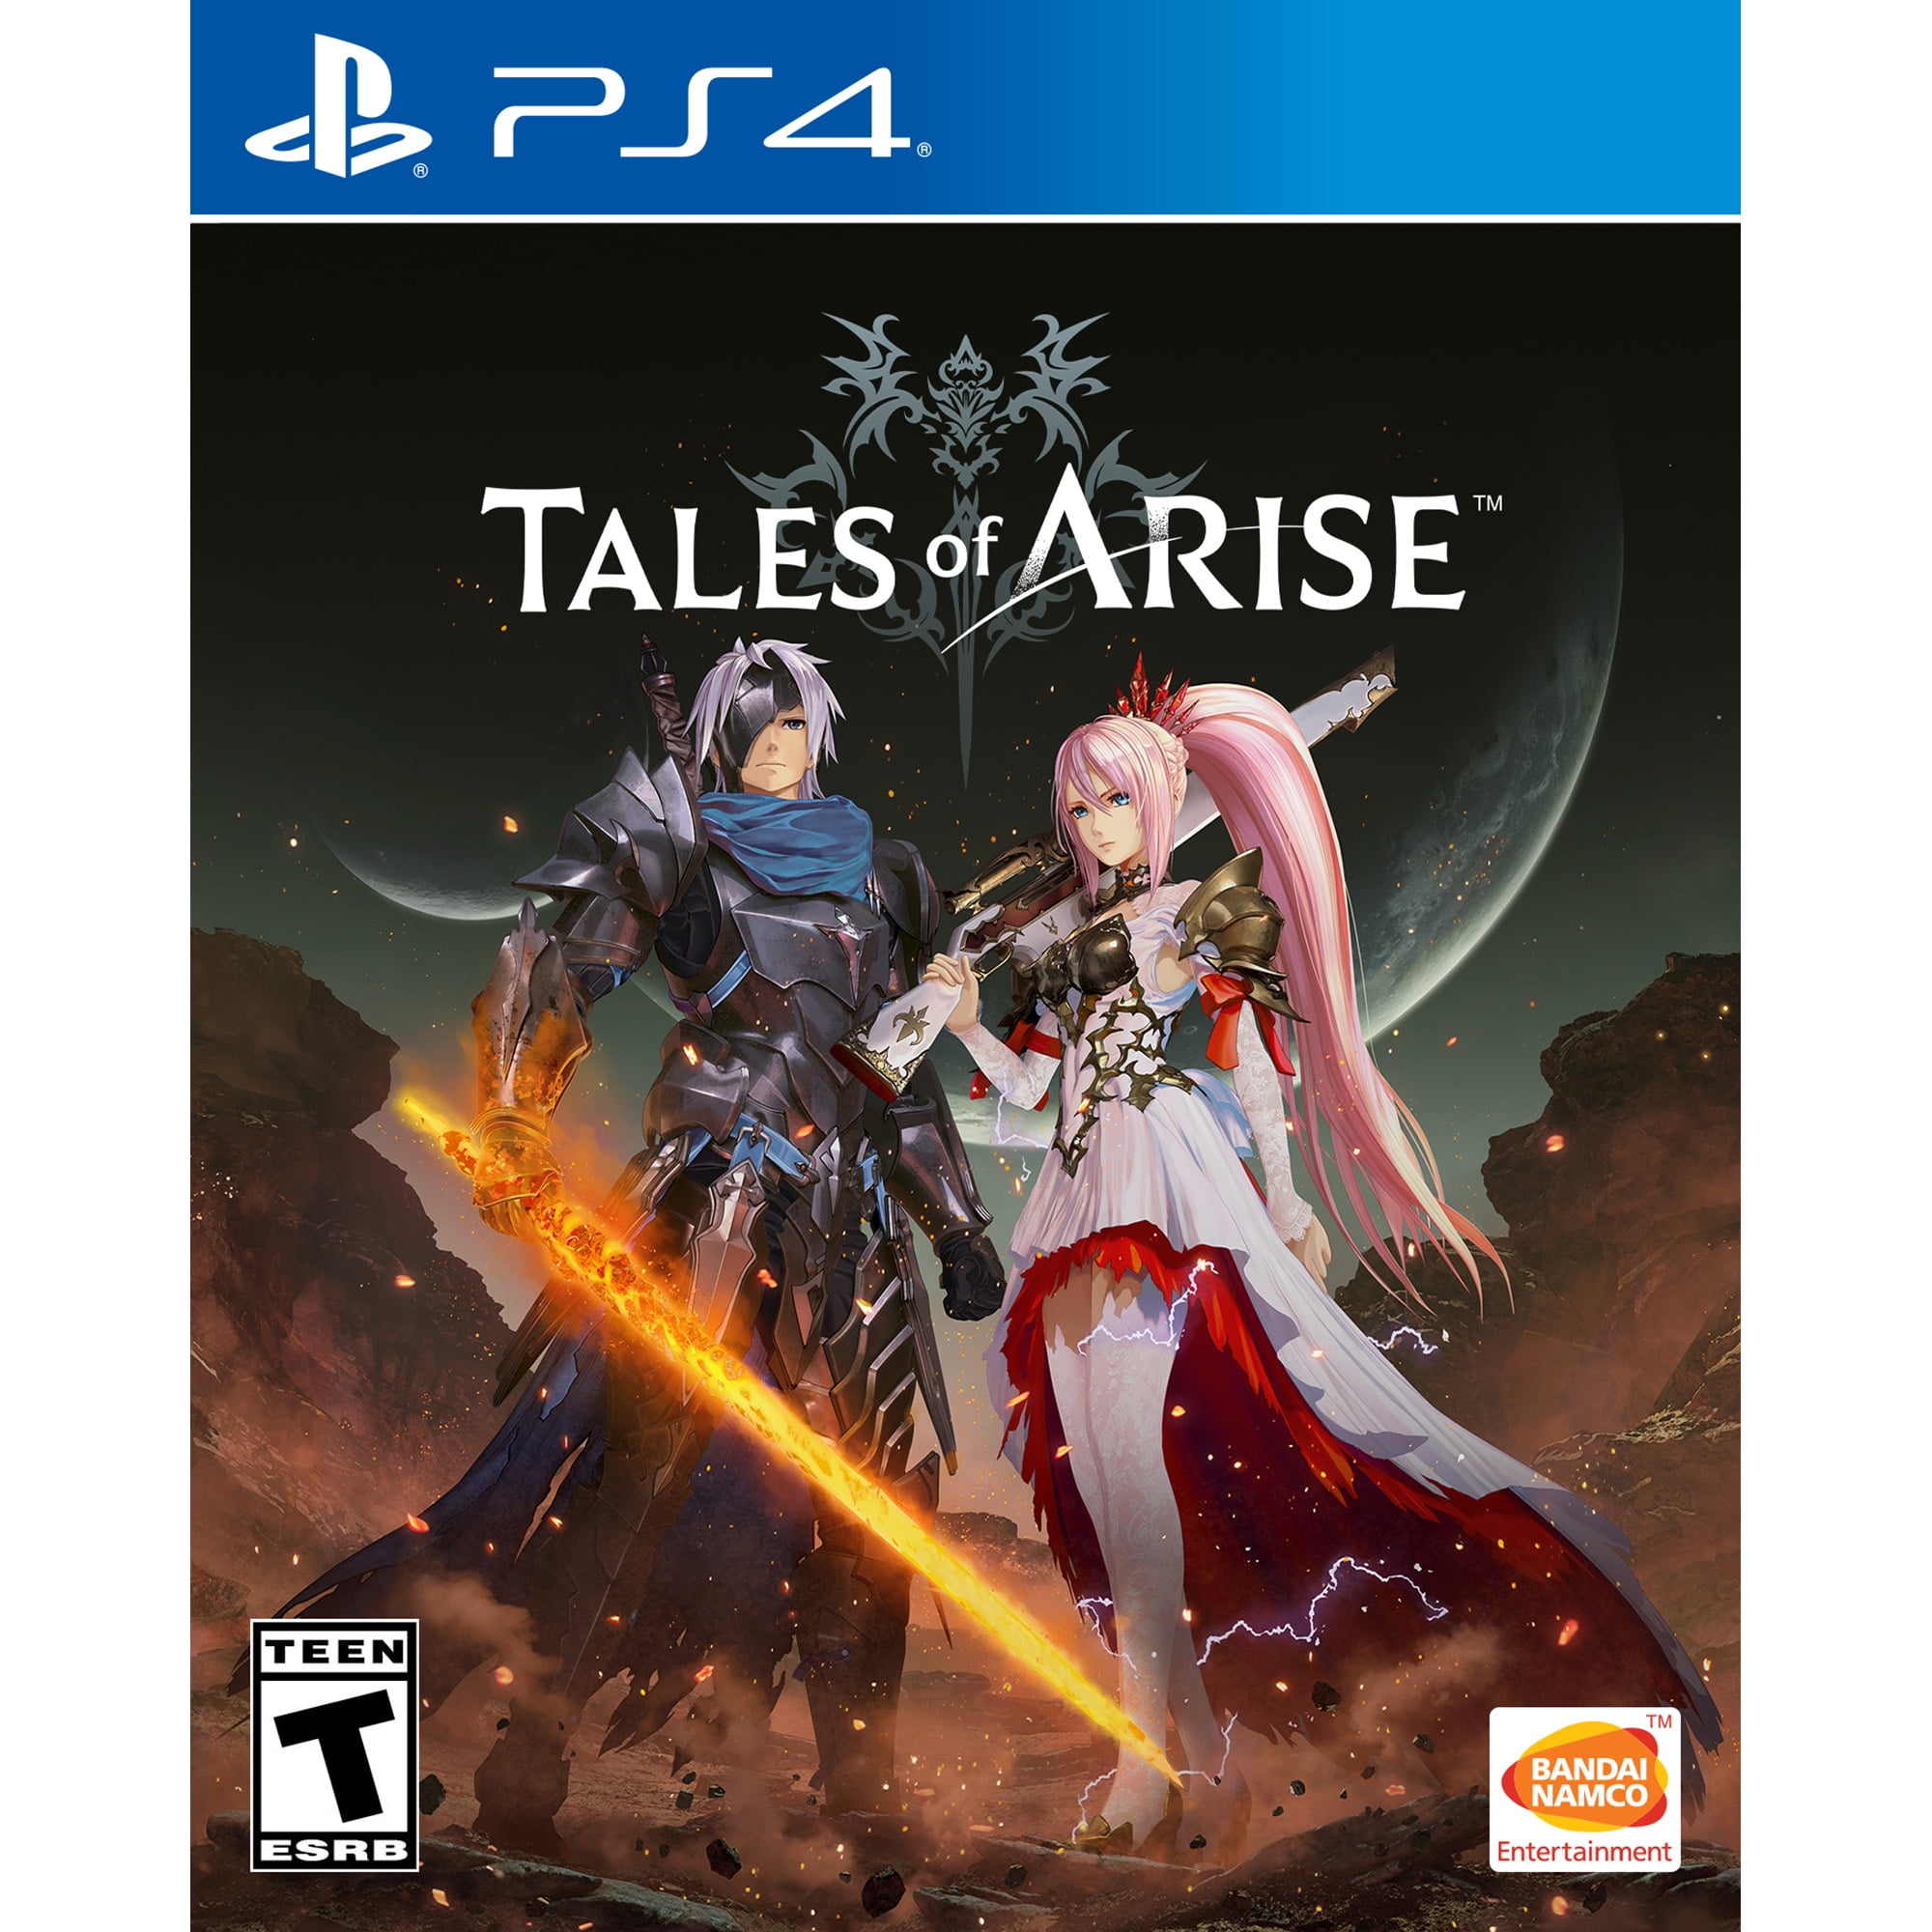 Legeme Prøve delikat Tales of Arise, Bandai Namco, PlayStation 4, 722674121989 - Walmart.com